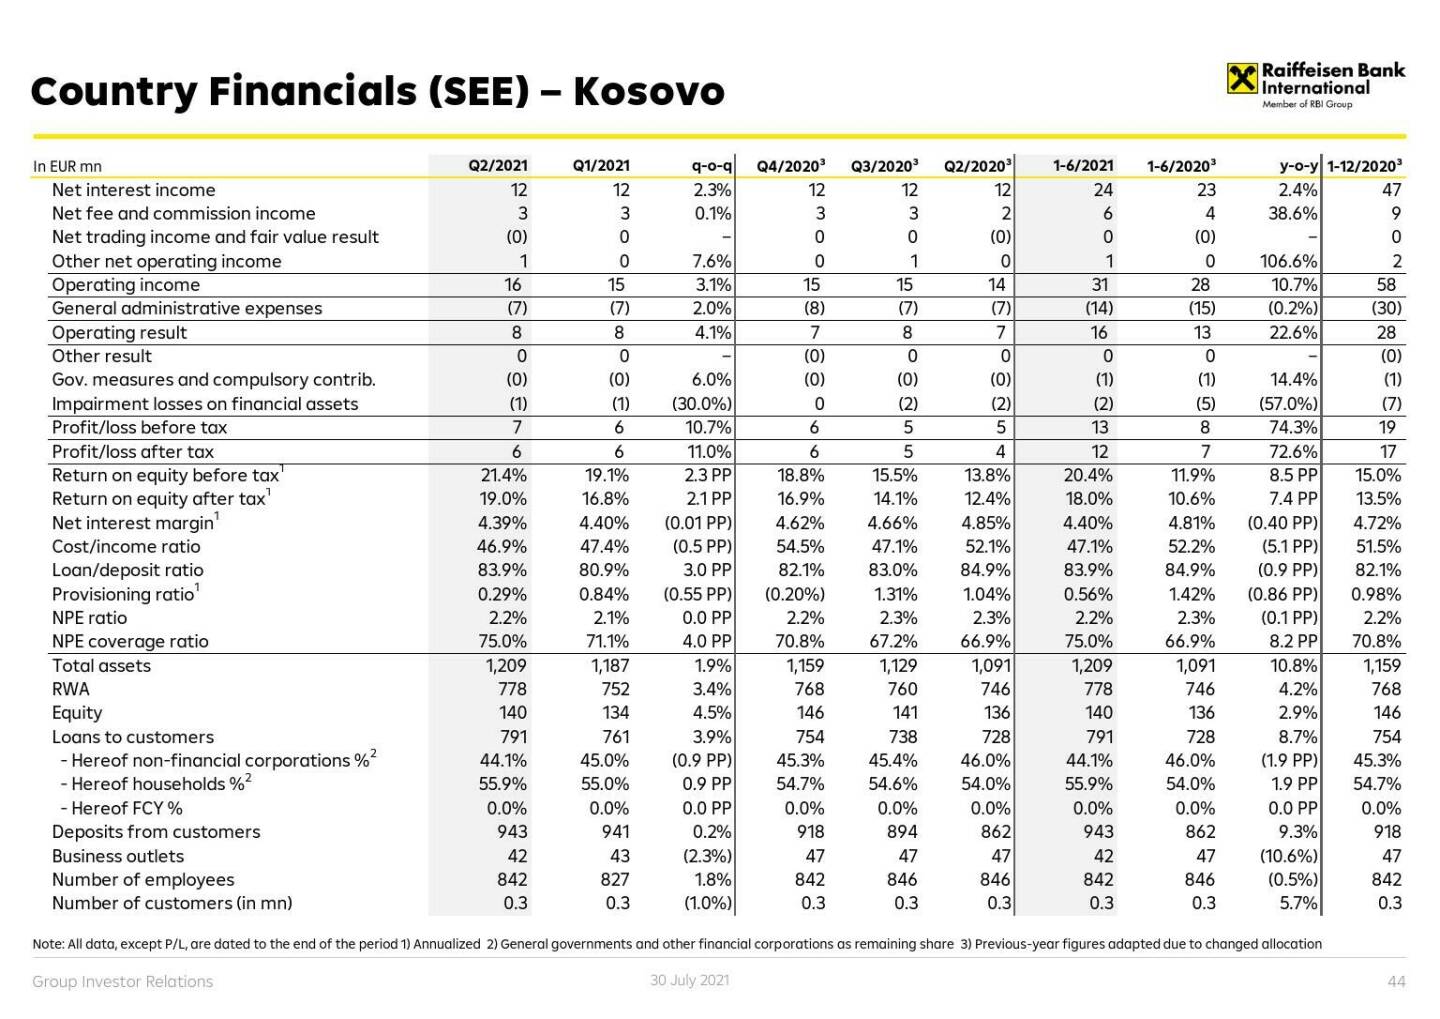 RBI - Country financials (CE) - Kosovo